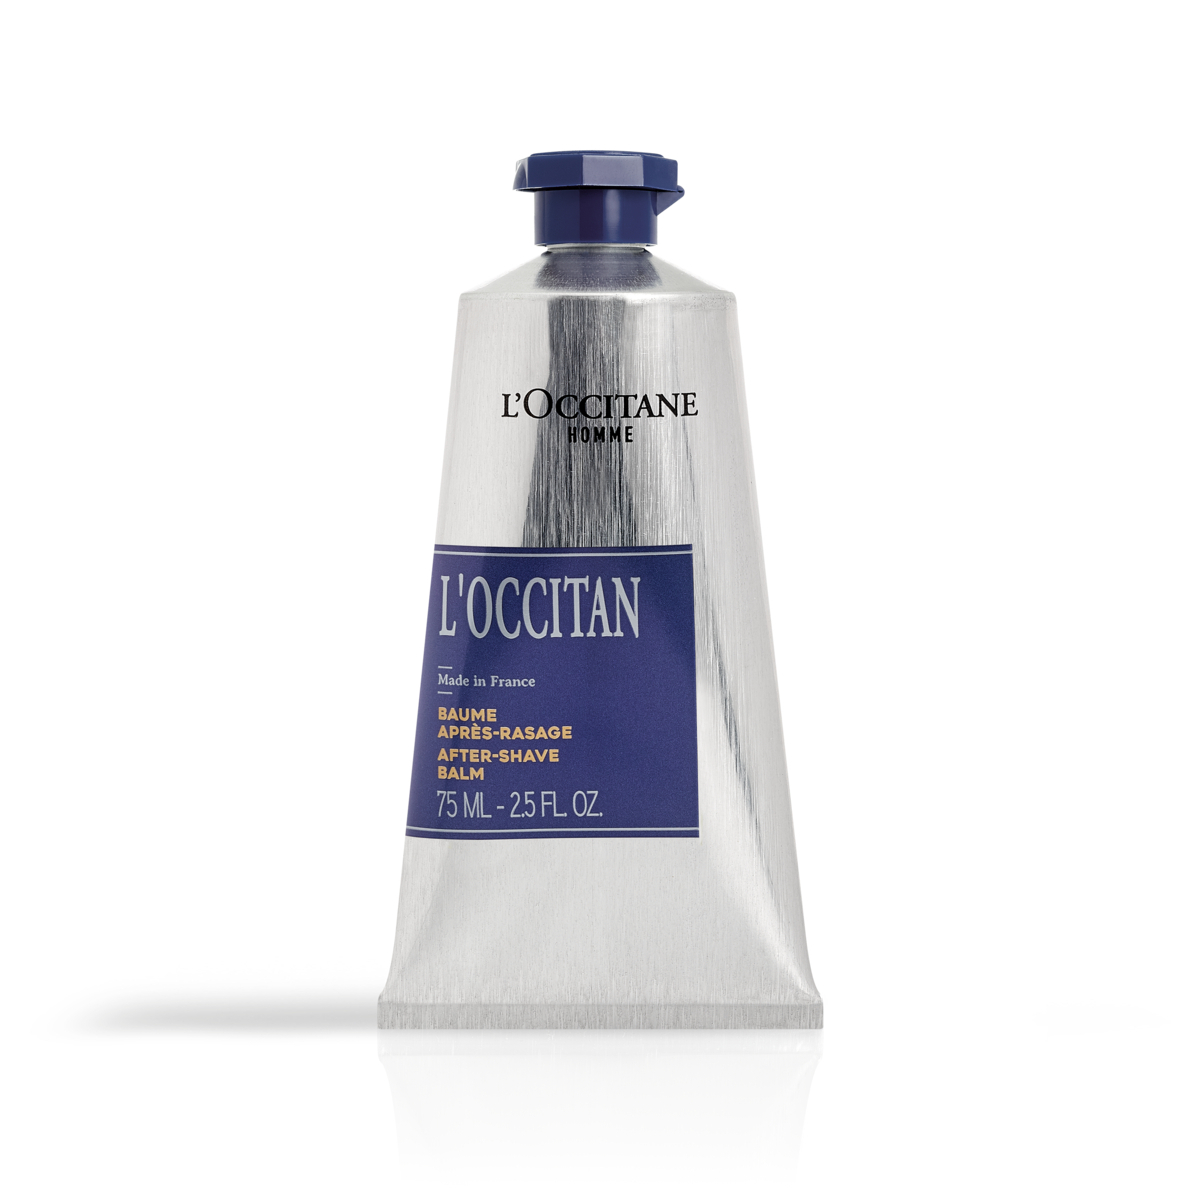 L'occitane Homme aftershave balm / 75 ml / heren